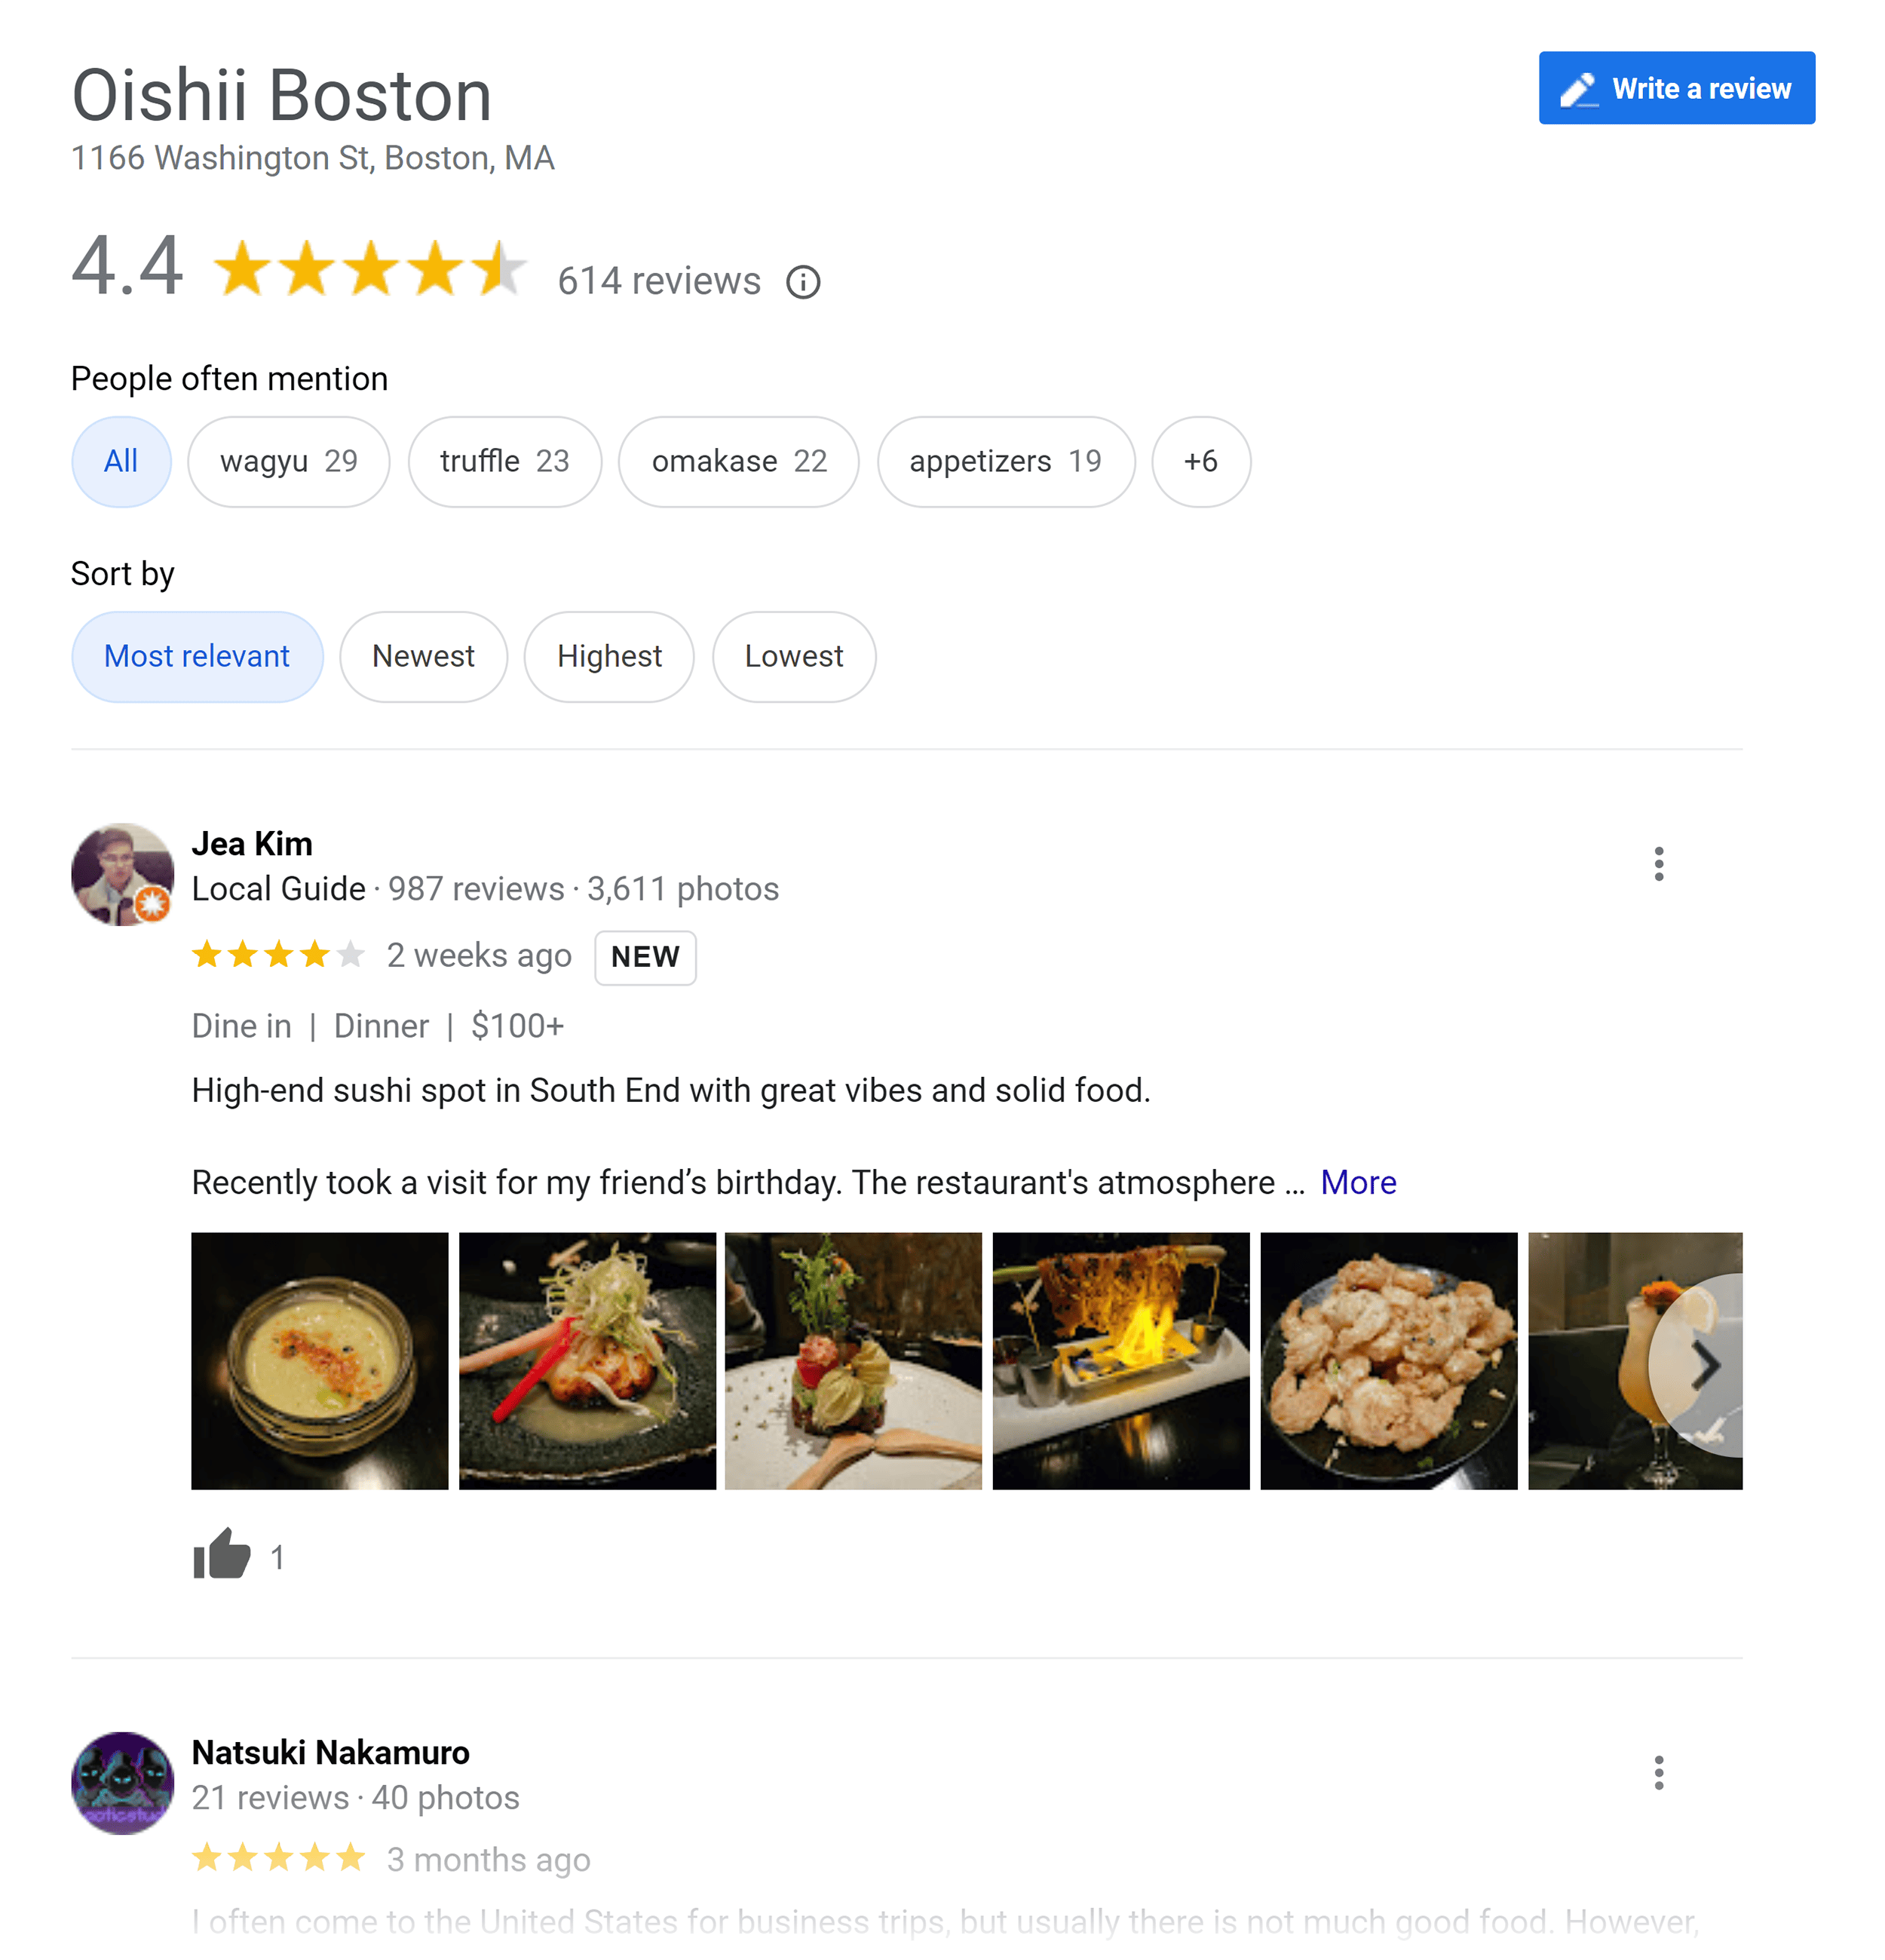 Oishii Boston – Google Reviews